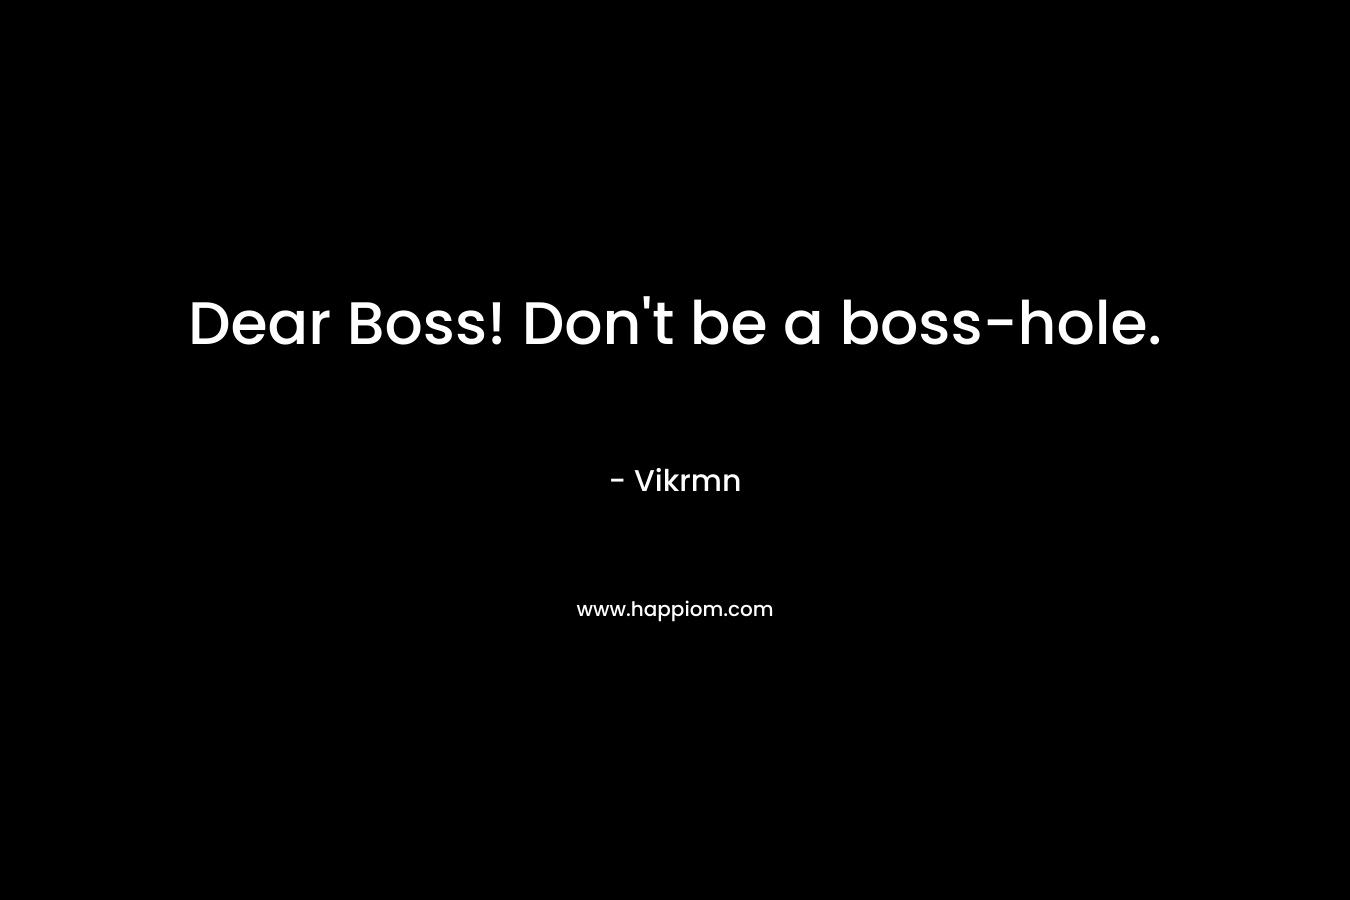 Dear Boss! Don't be a boss-hole.